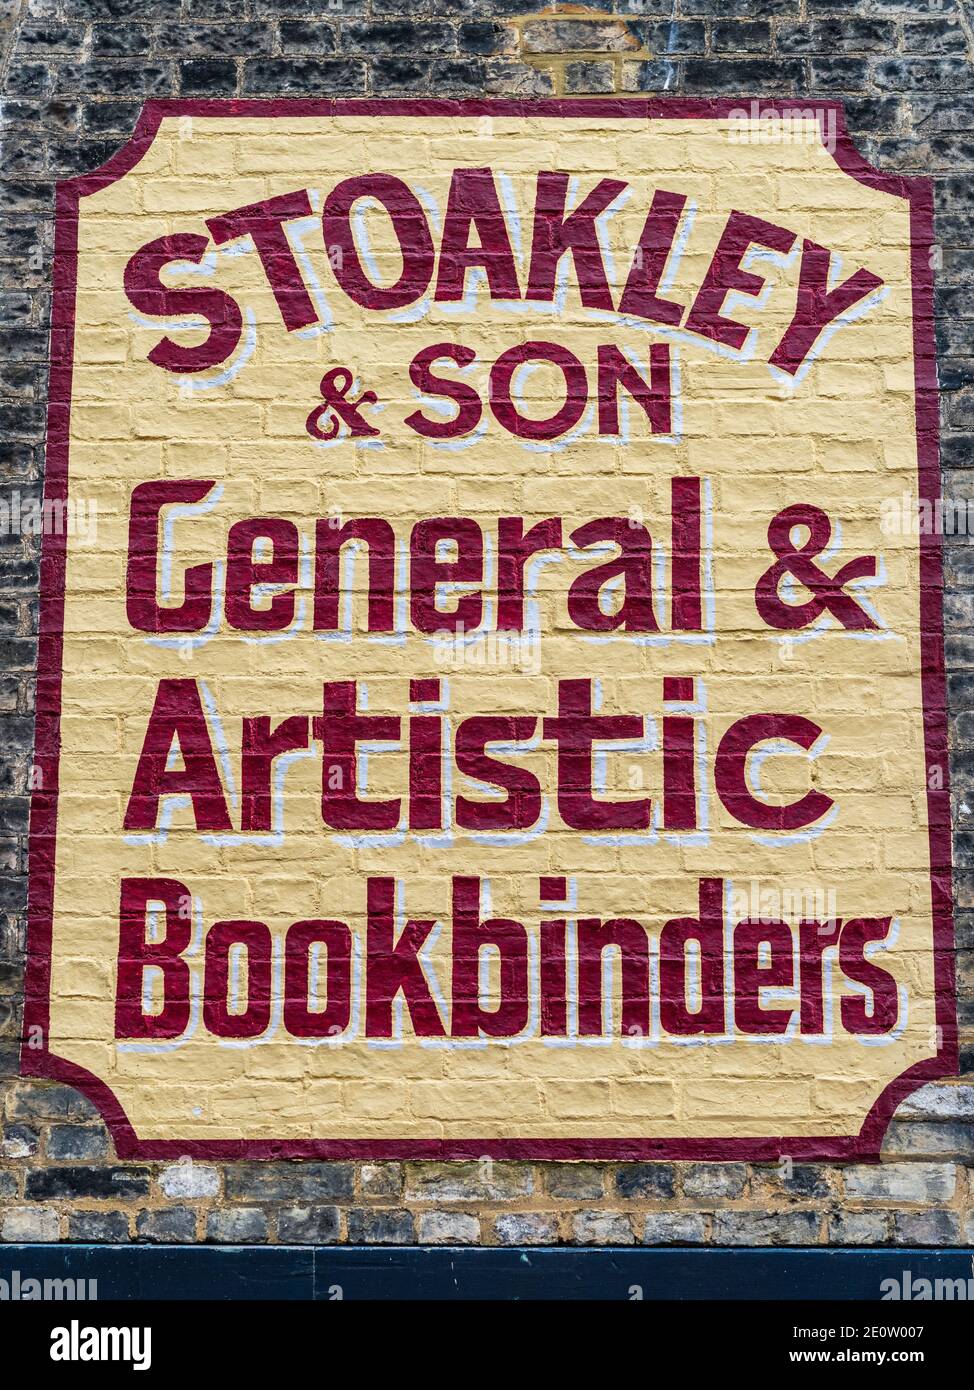 Painted Wall Advert Cambridge - controverso restauro di un Ghost Sign in Green Street Cambridge per Stoakley & Son General & Artistic bookbinders. Foto Stock